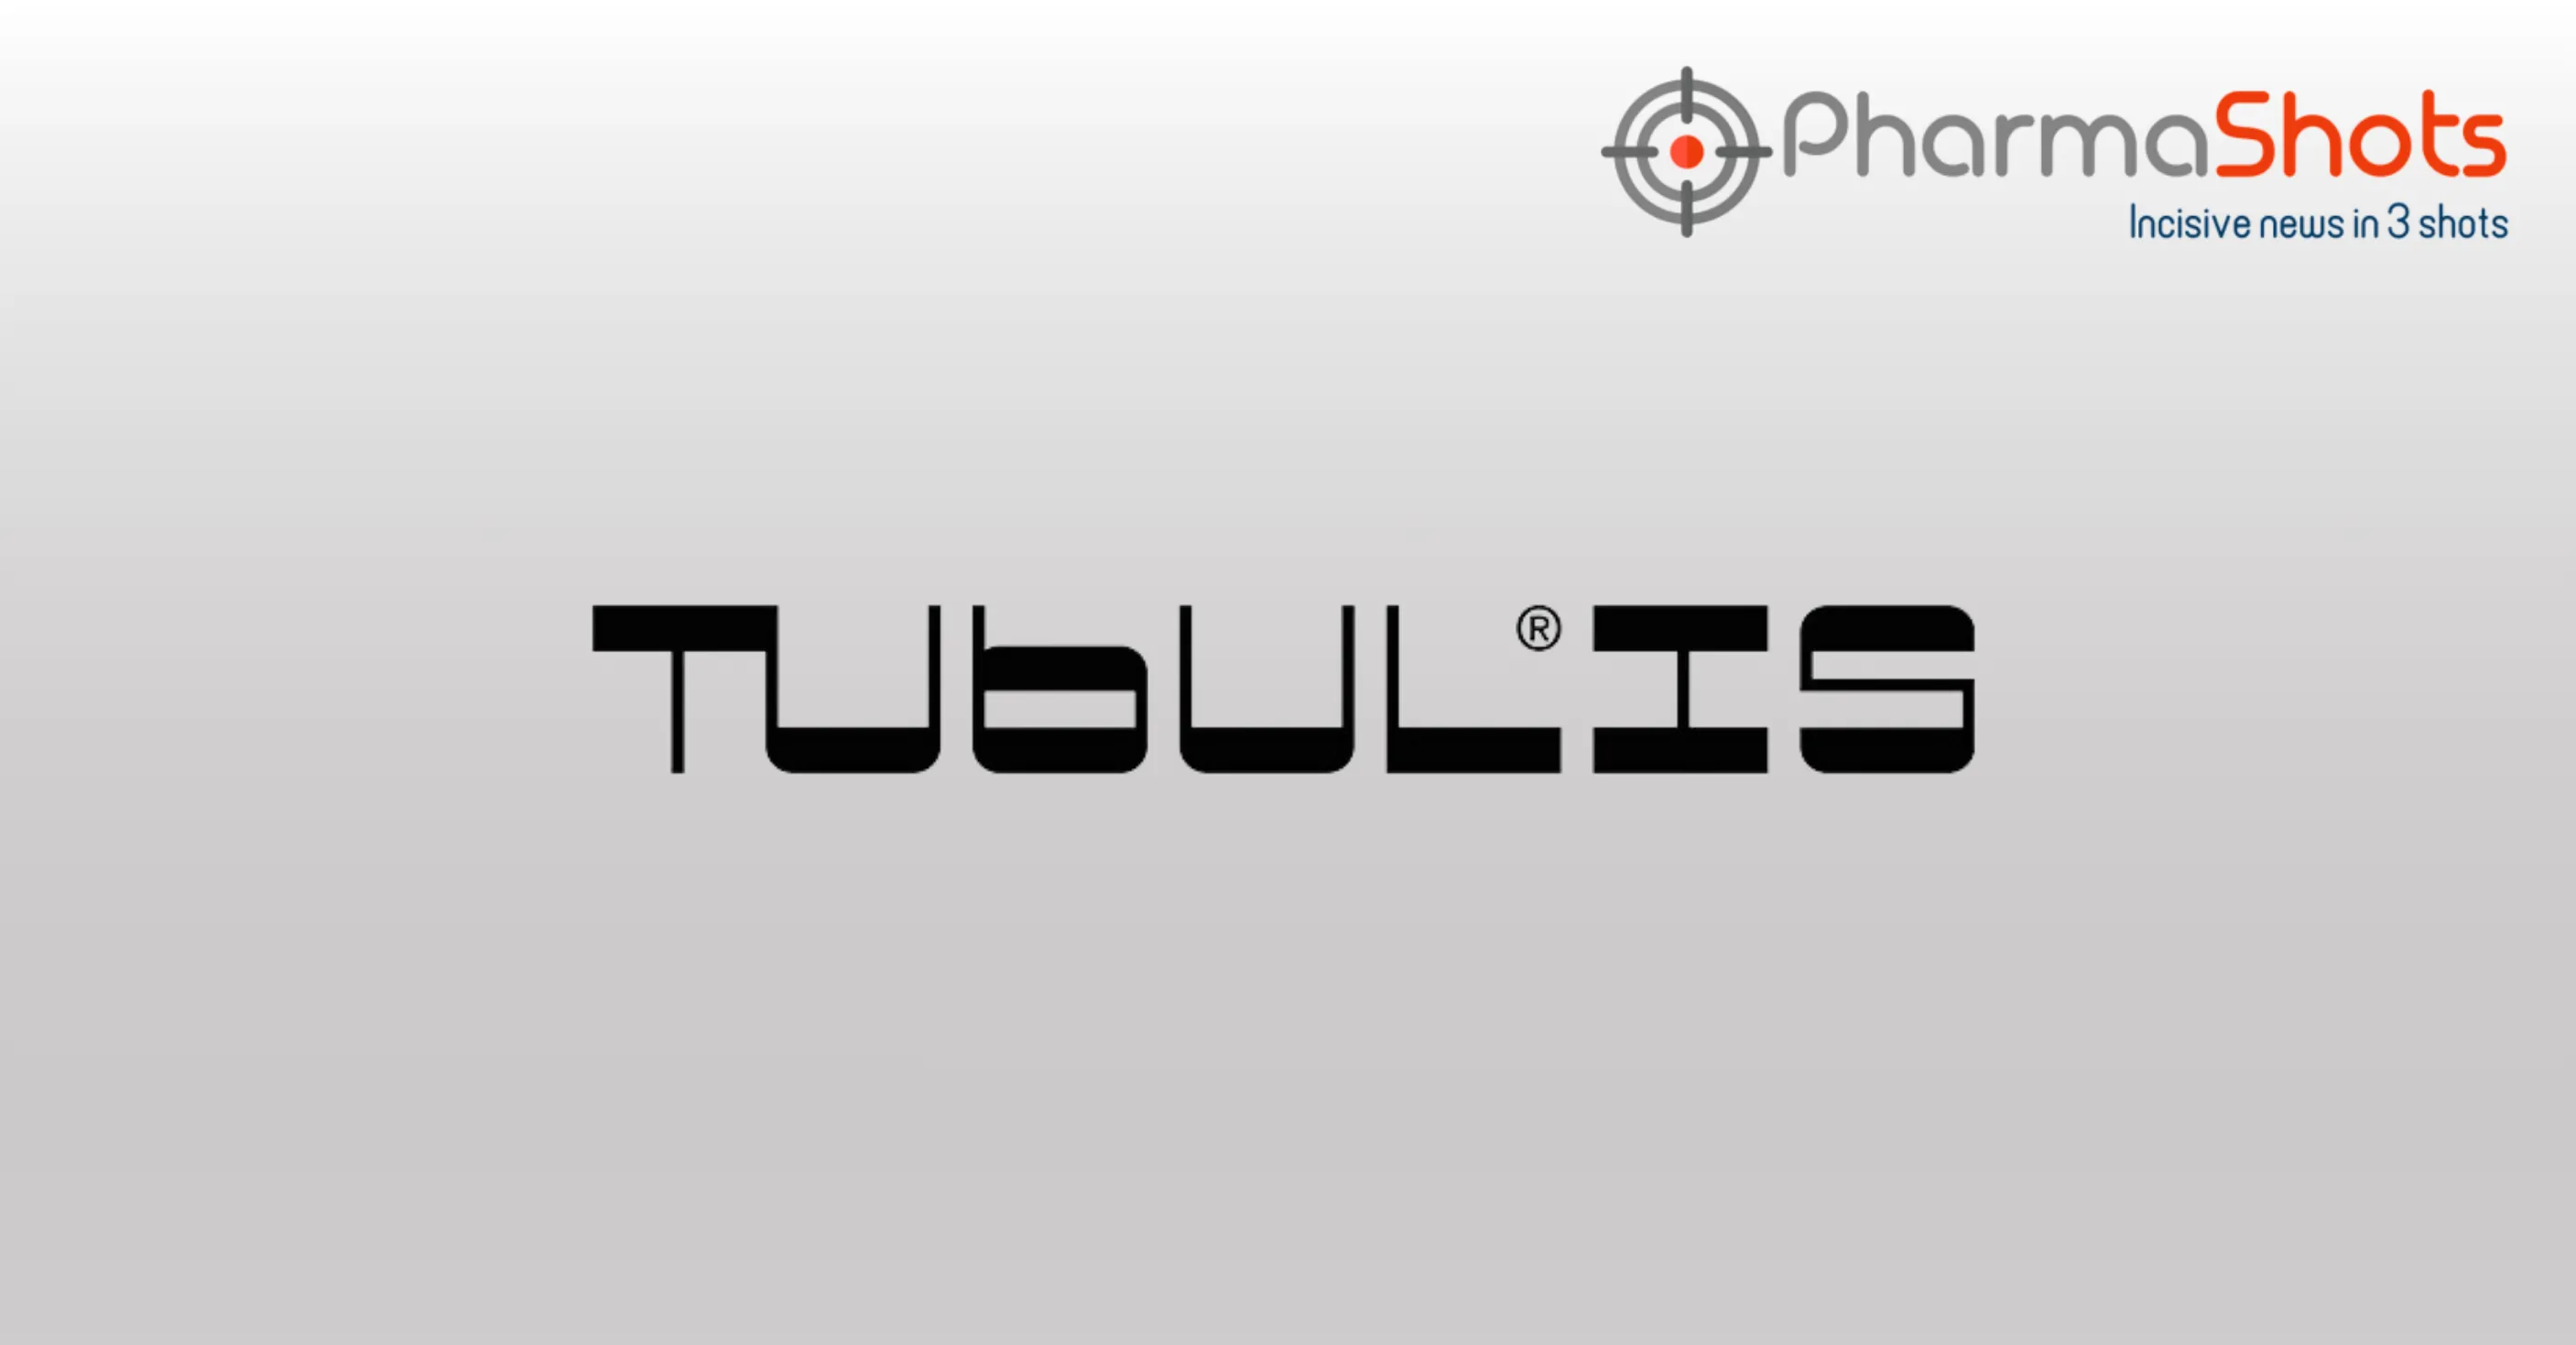 Tubulis Reports the US FDA’s Fast Track Designation of TUB-040 to Treat Ovarian Cancer